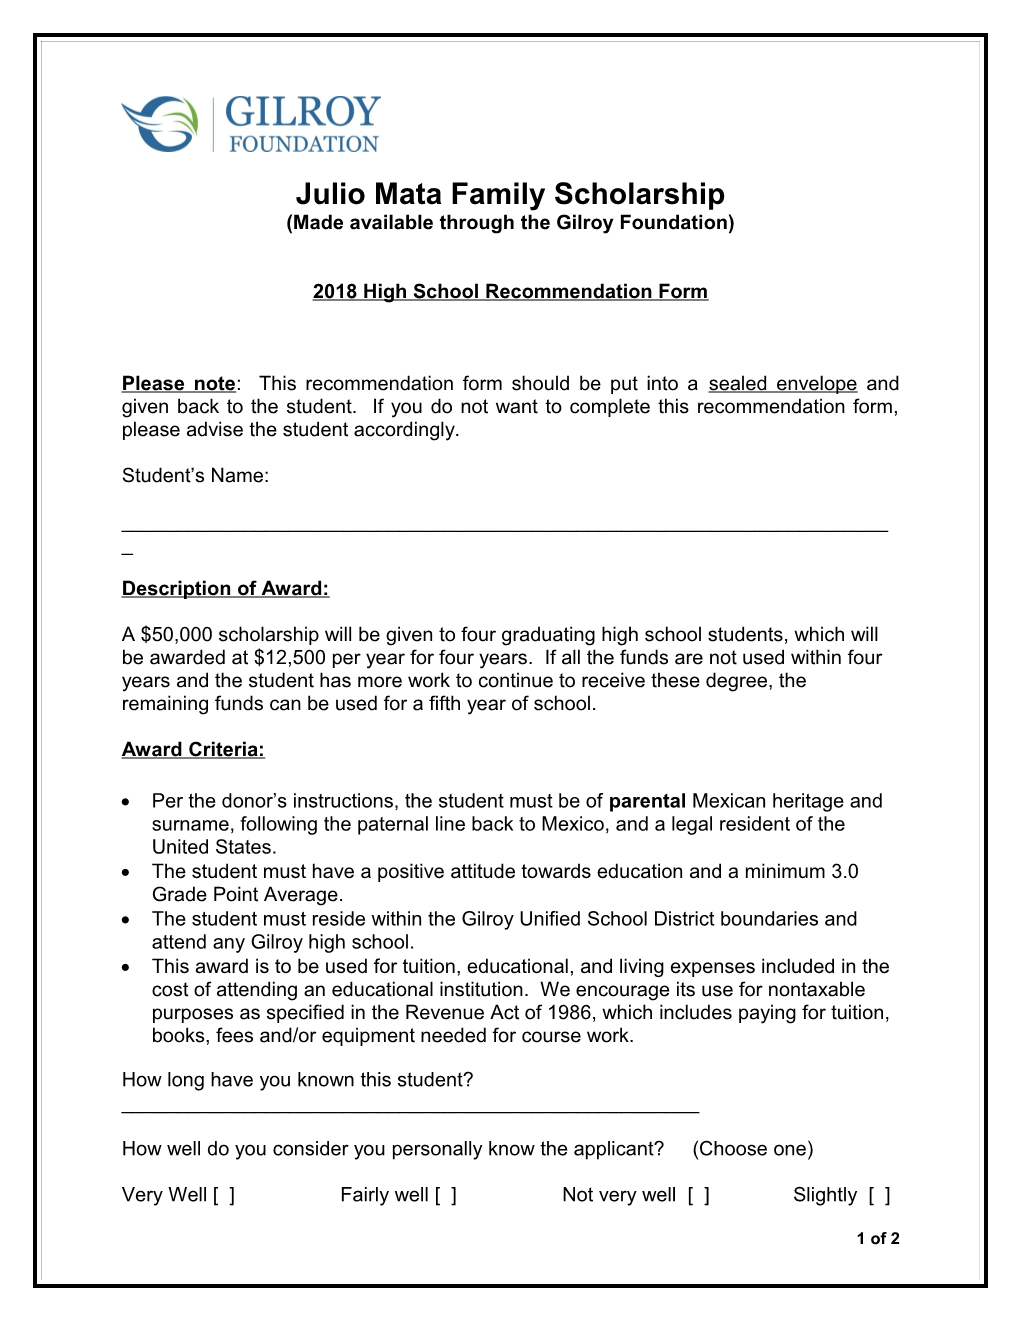 Julio Mata Family Scholarship